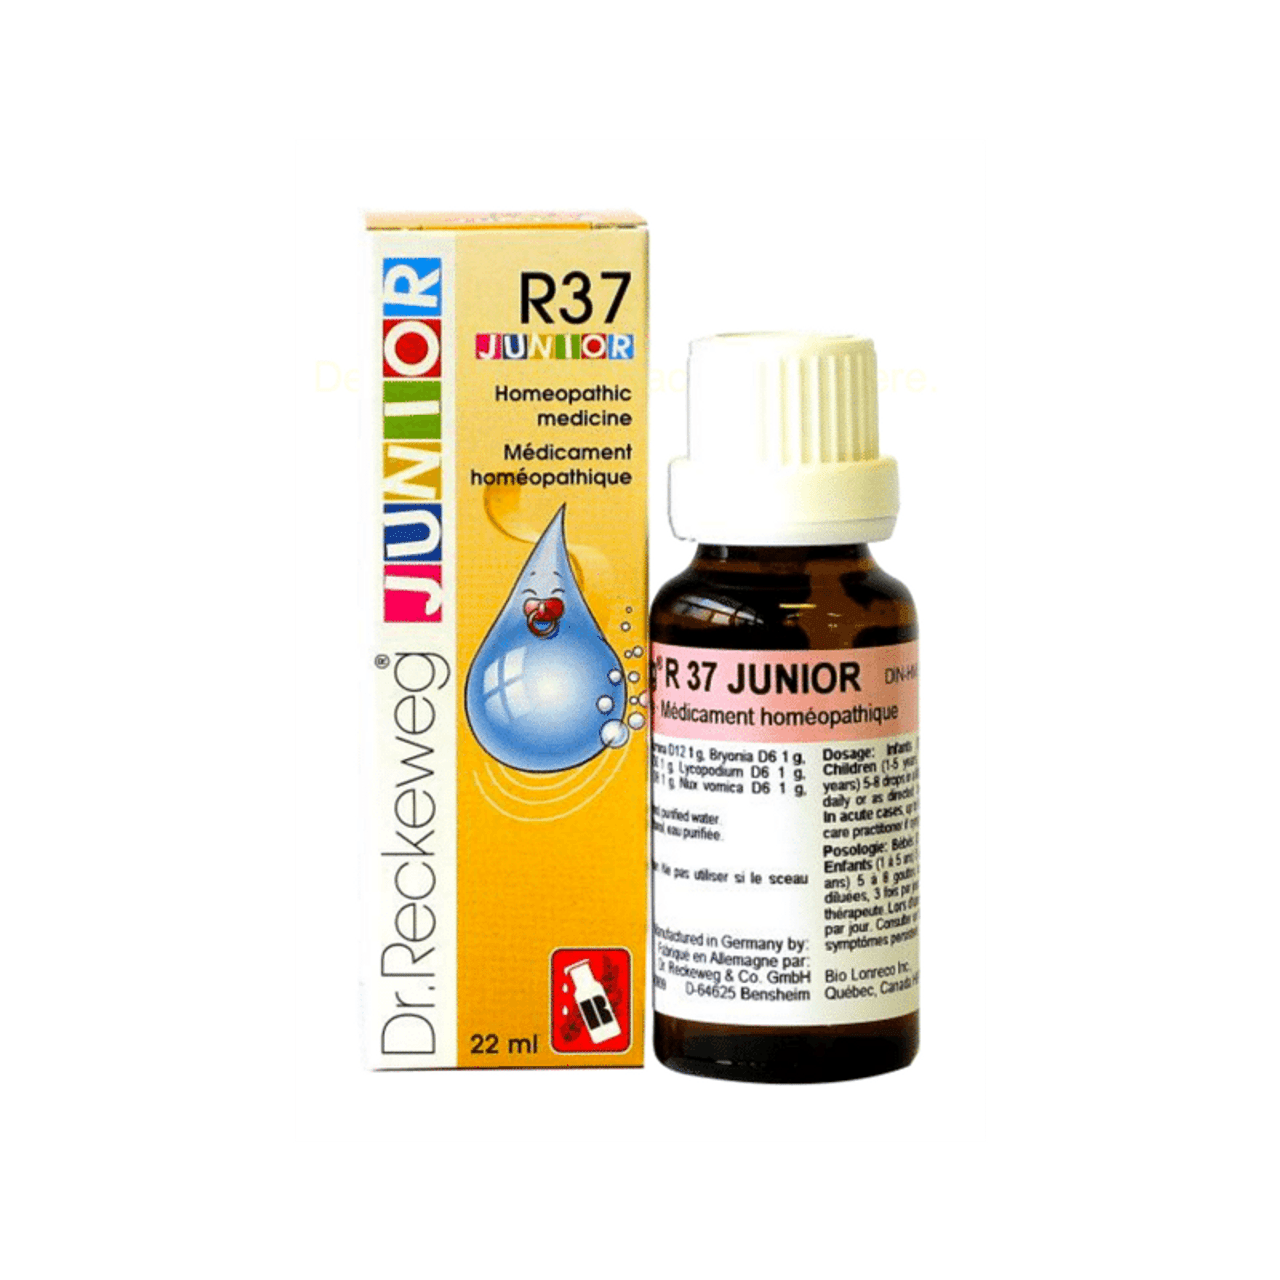 R37 JUNIOR Homeopathic medicine 22 ml